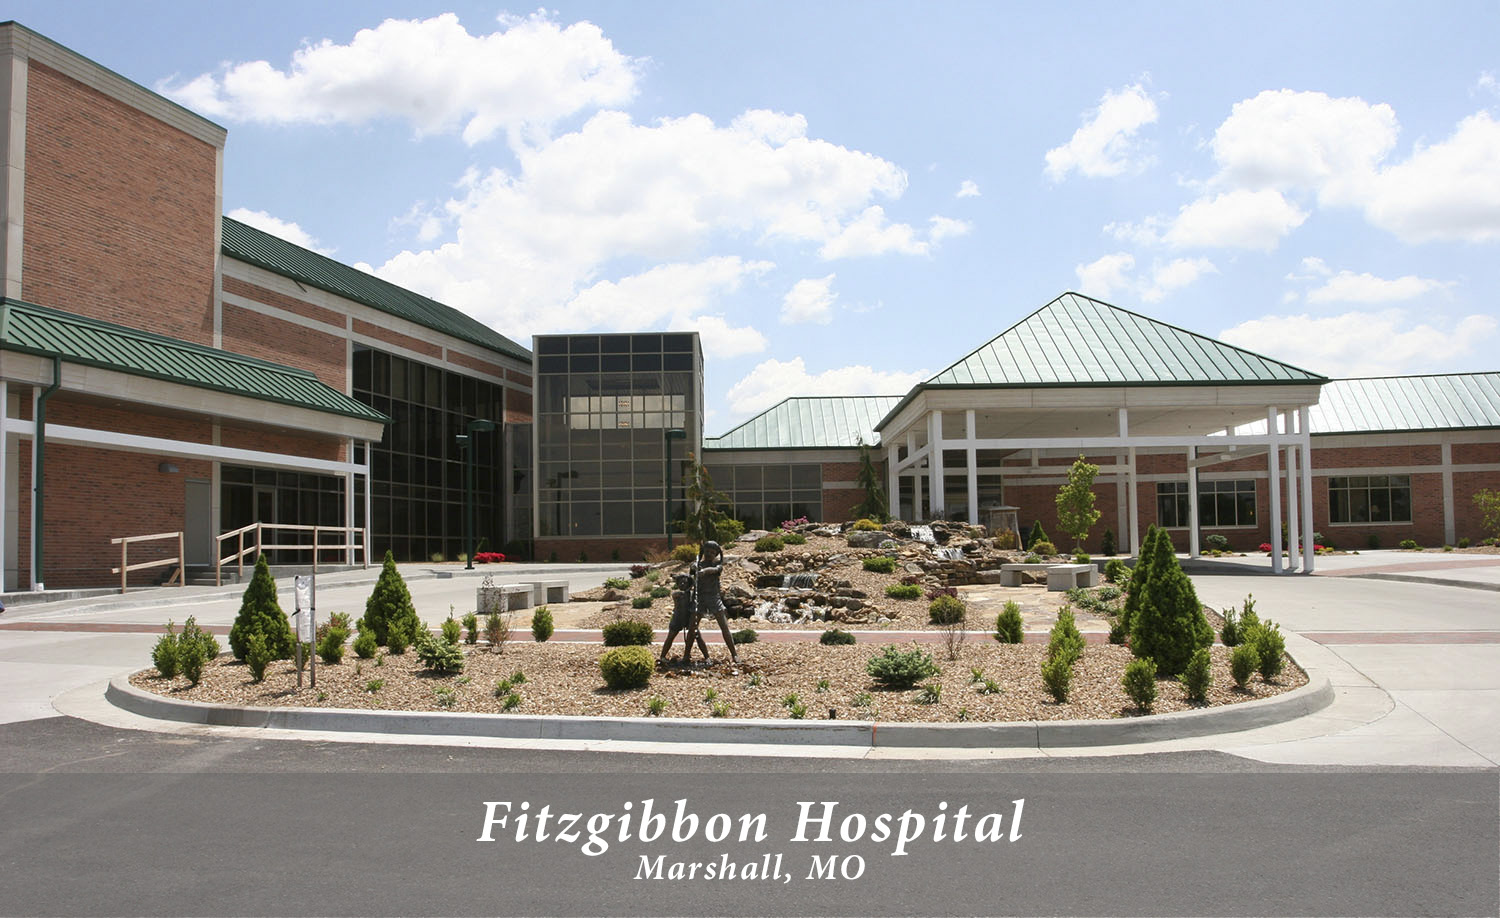 Fitzgibbon Hospital Cover Photo.jpg